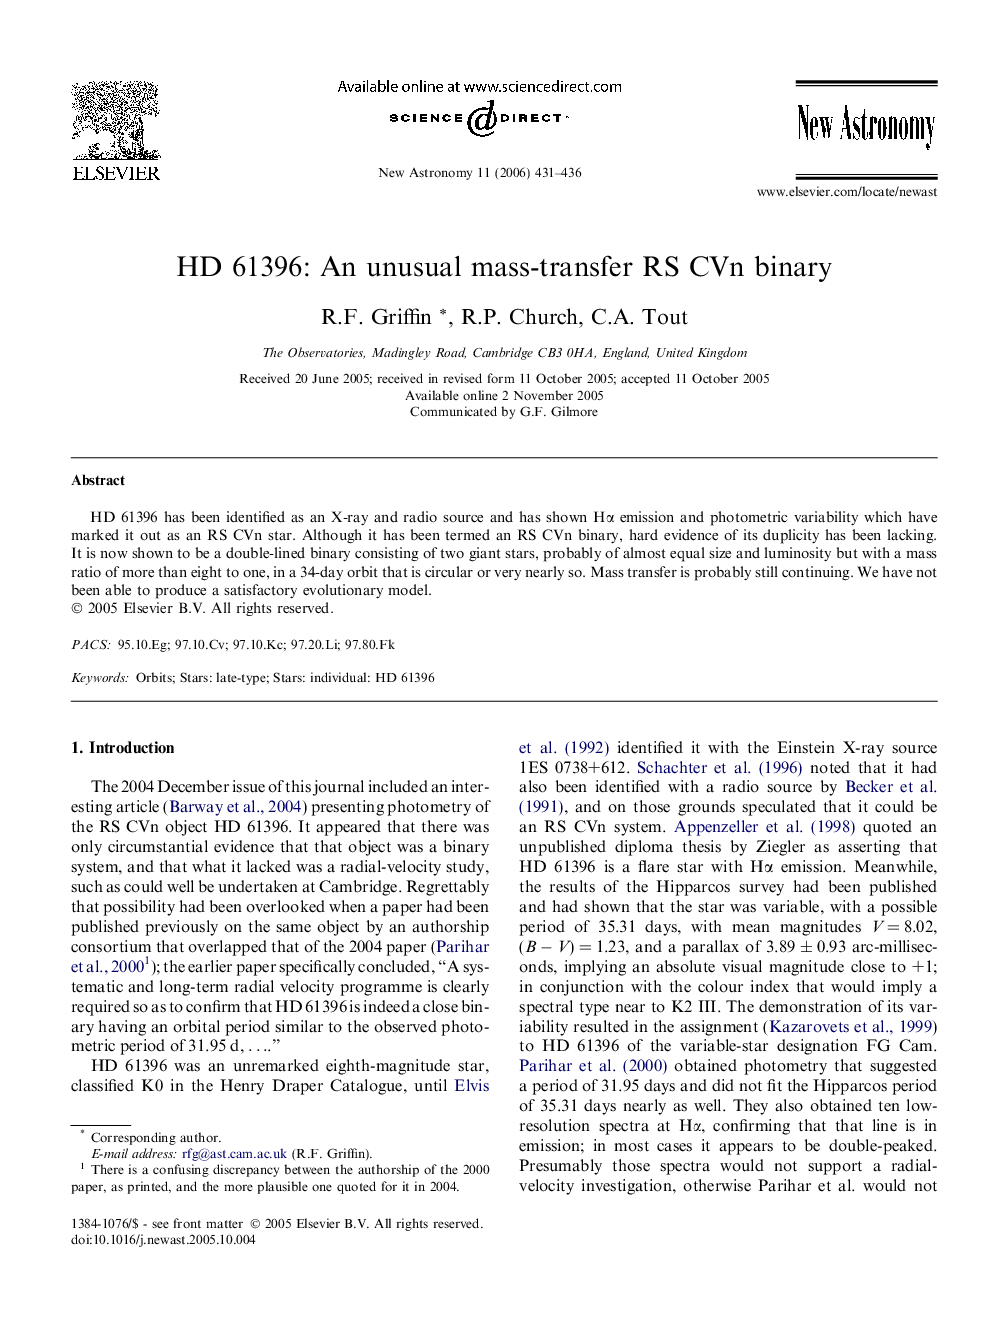 HD 61396: An unusual mass-transfer RS CVn binary